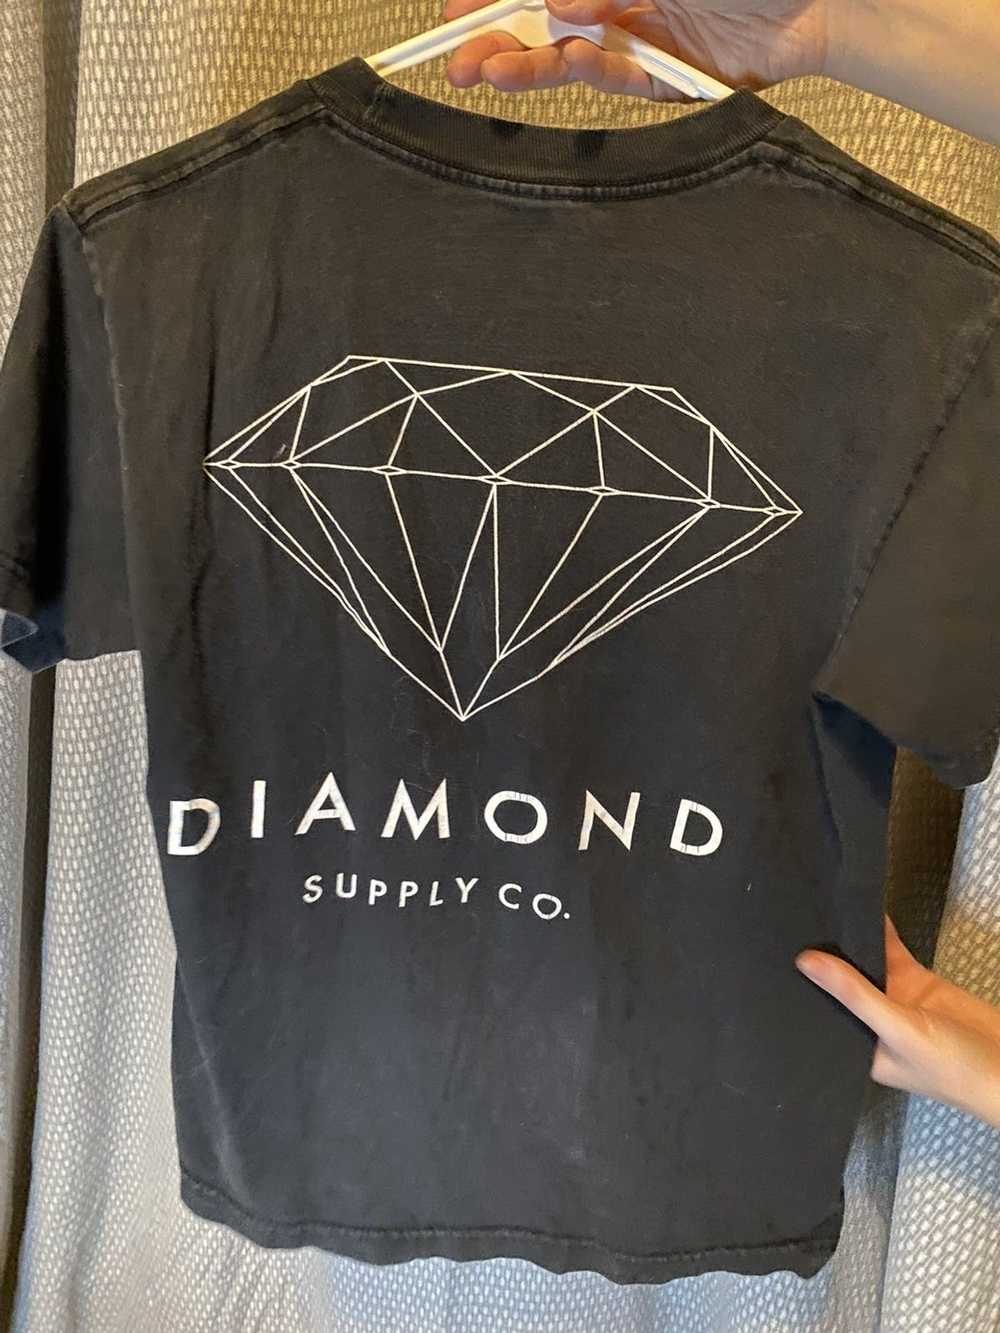 Diamond Supply Co Diamond Supply Co. Company T-Sh… - image 2